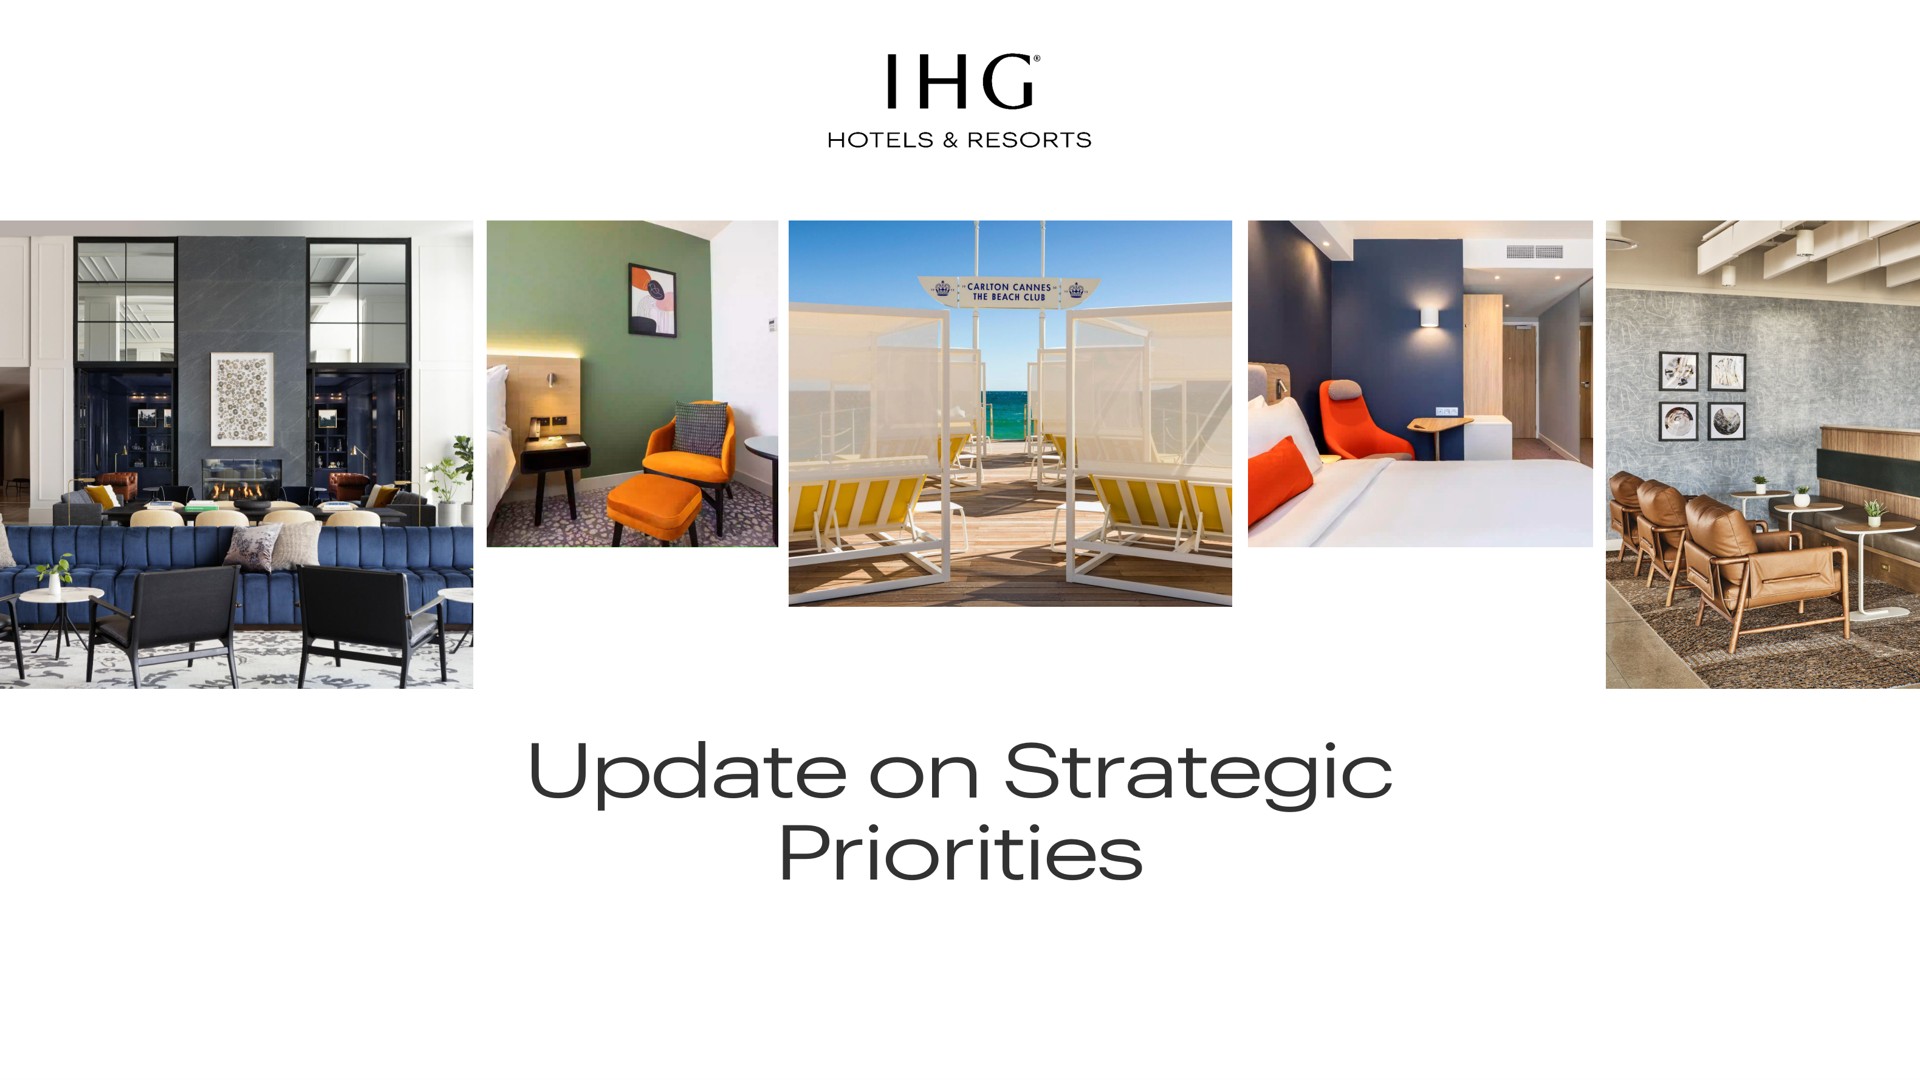 update on strategic priorities | IHG Hotels